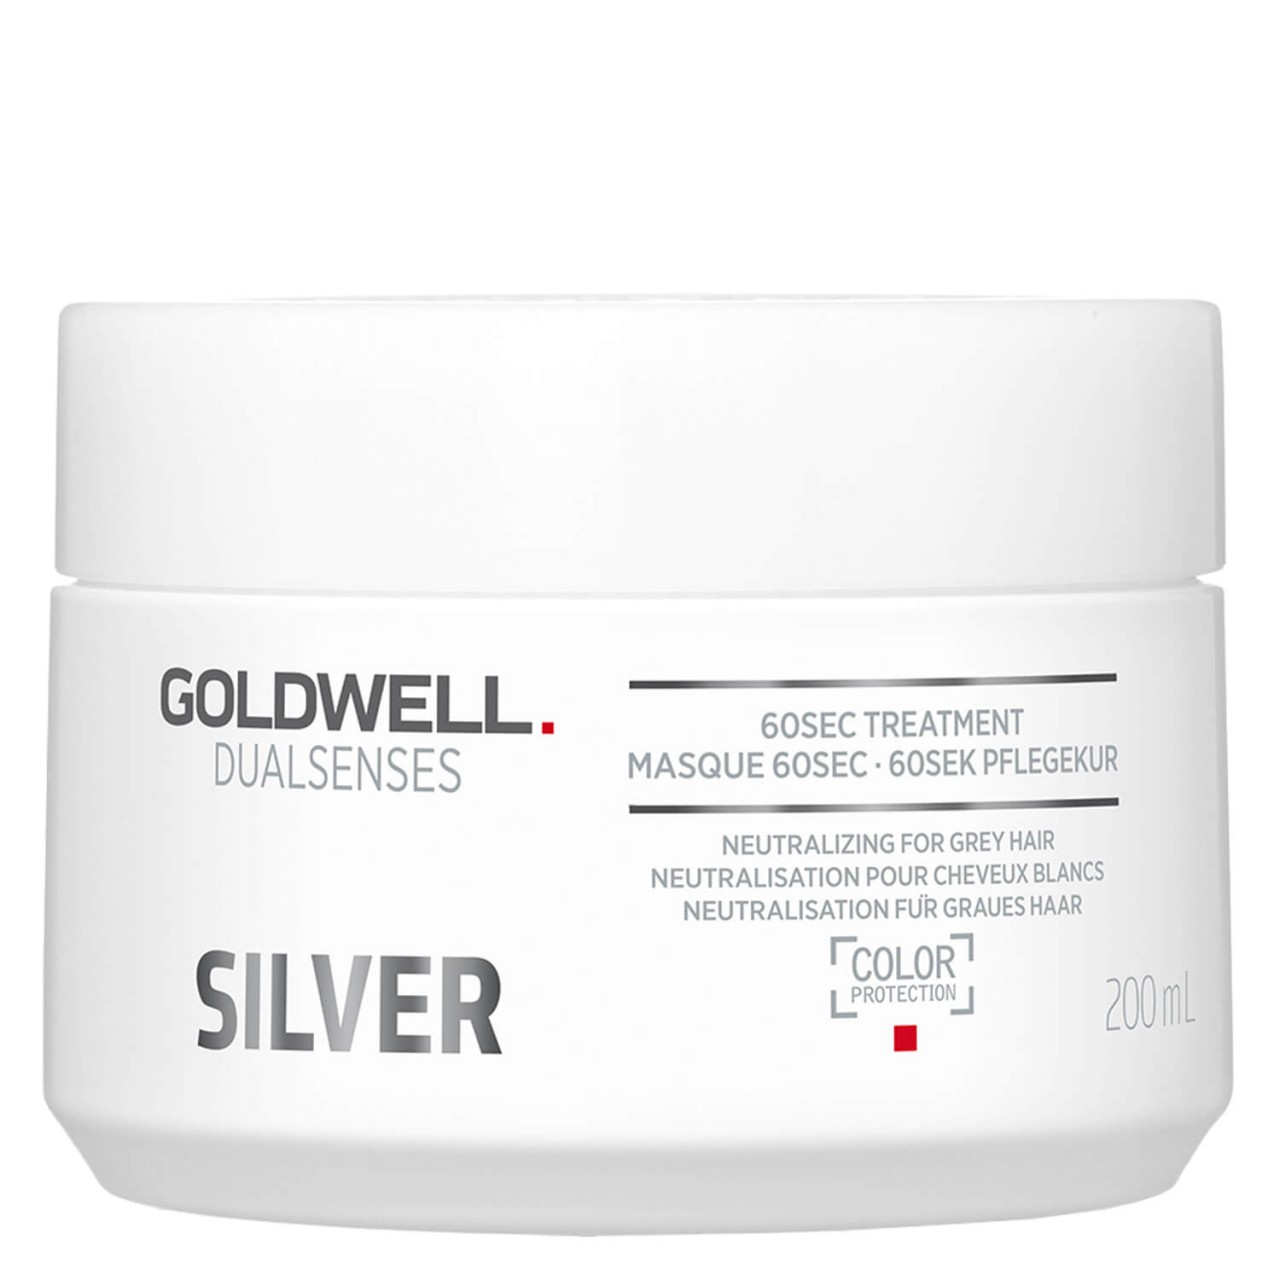 Dualsenses Silver 60sec Treatment von Goldwell